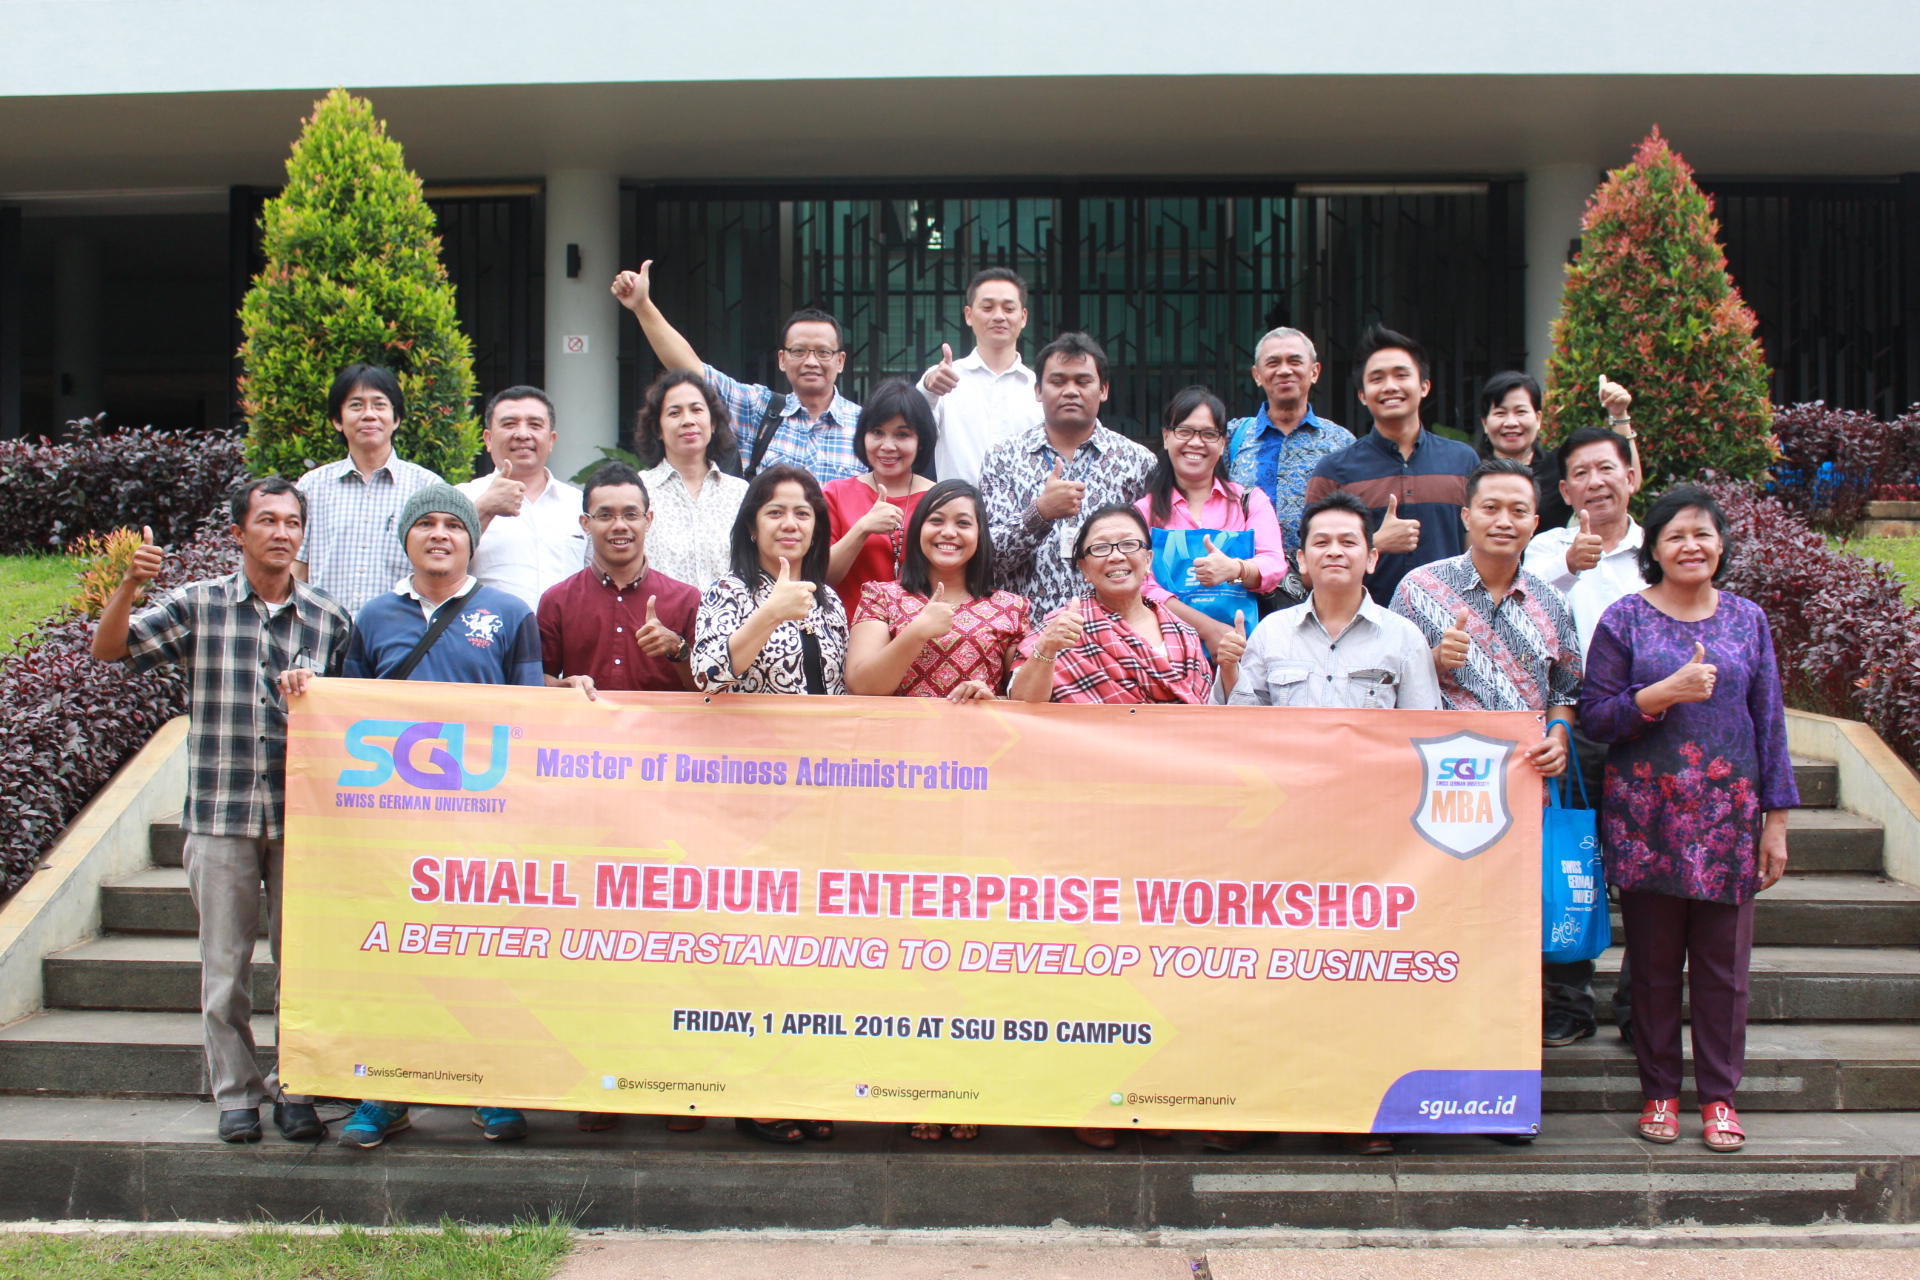 Small – Medium Enterprise Workshop from MBA Program SGU